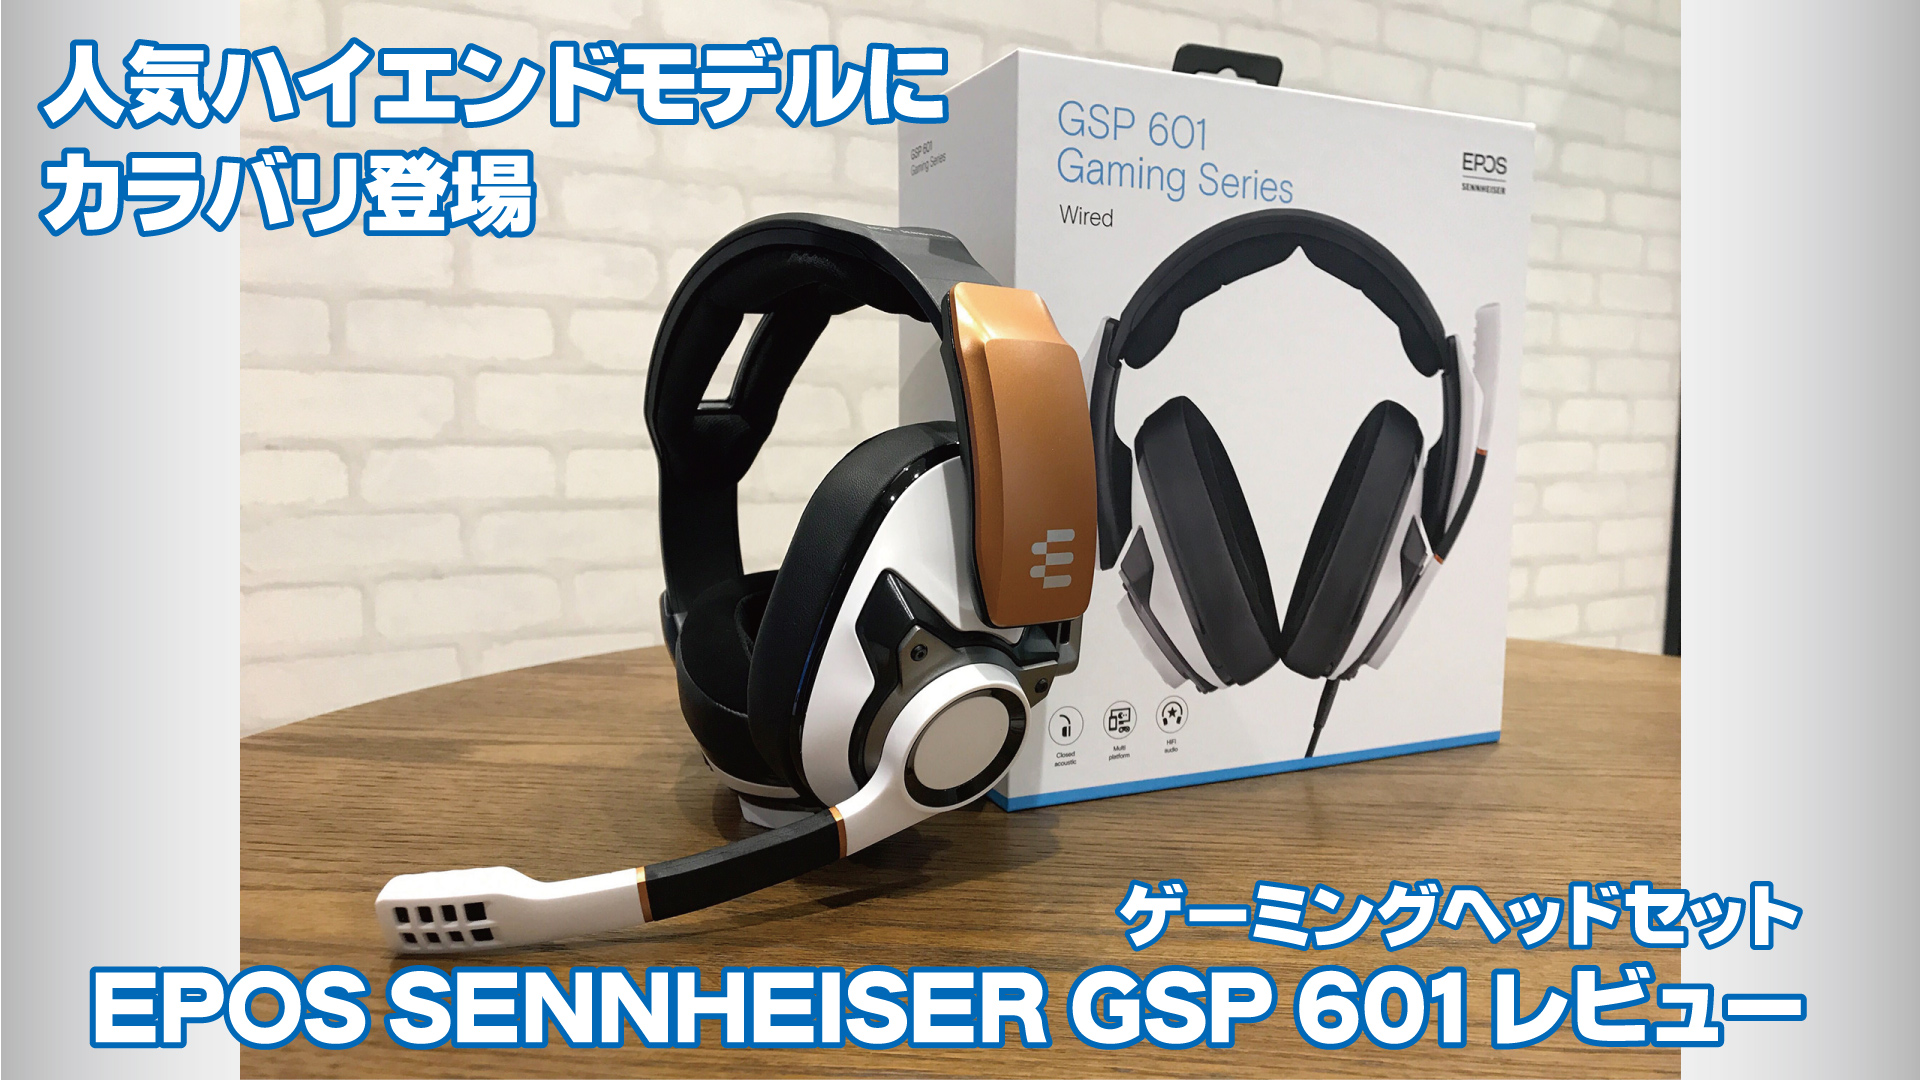 65%OFF【送料無料】 EPOS Sennheiser GSP 601 ゲーミングヘッドセット - オーディオ機器 -  www.thjodfelagid.is